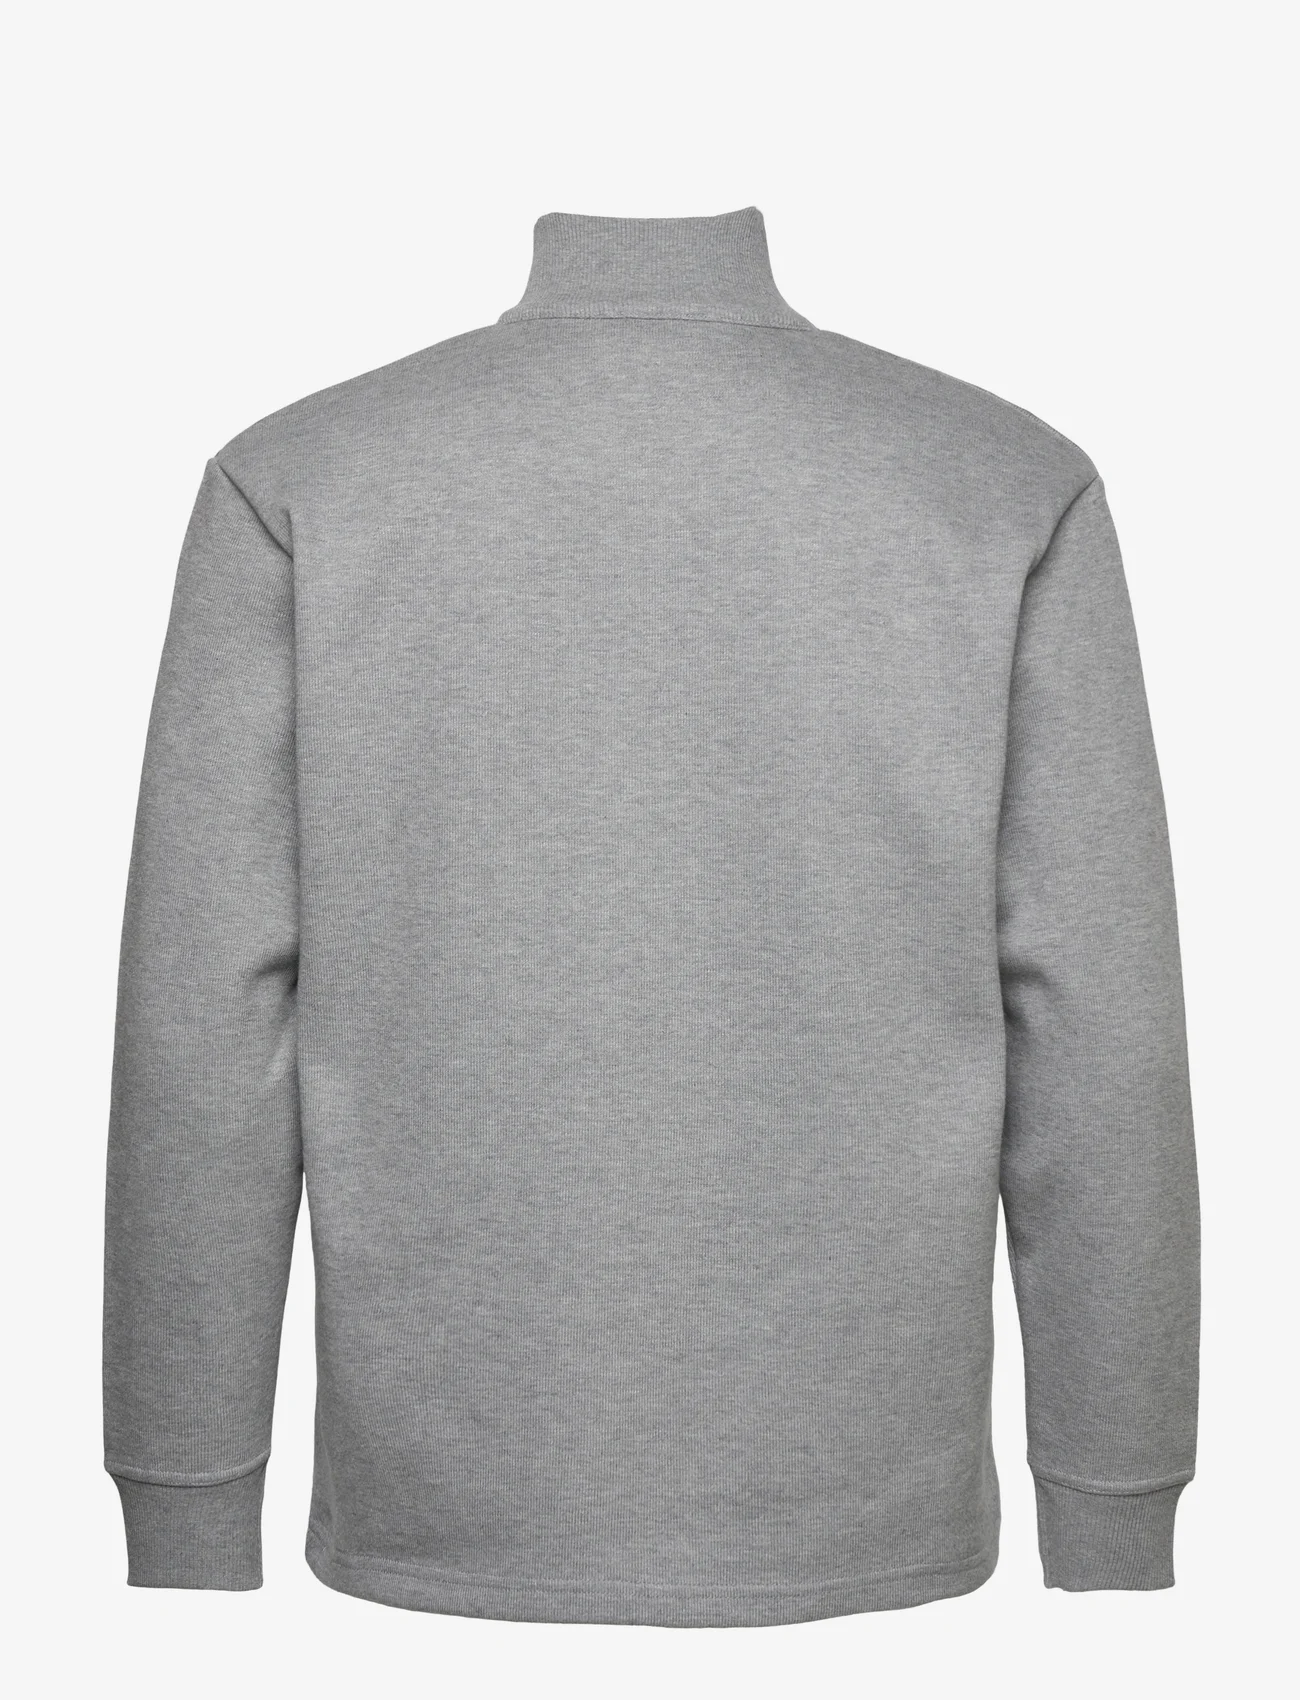 Armor Lux - Troyer sweatshirt Héritage - sweatshirts - misty grey - 1